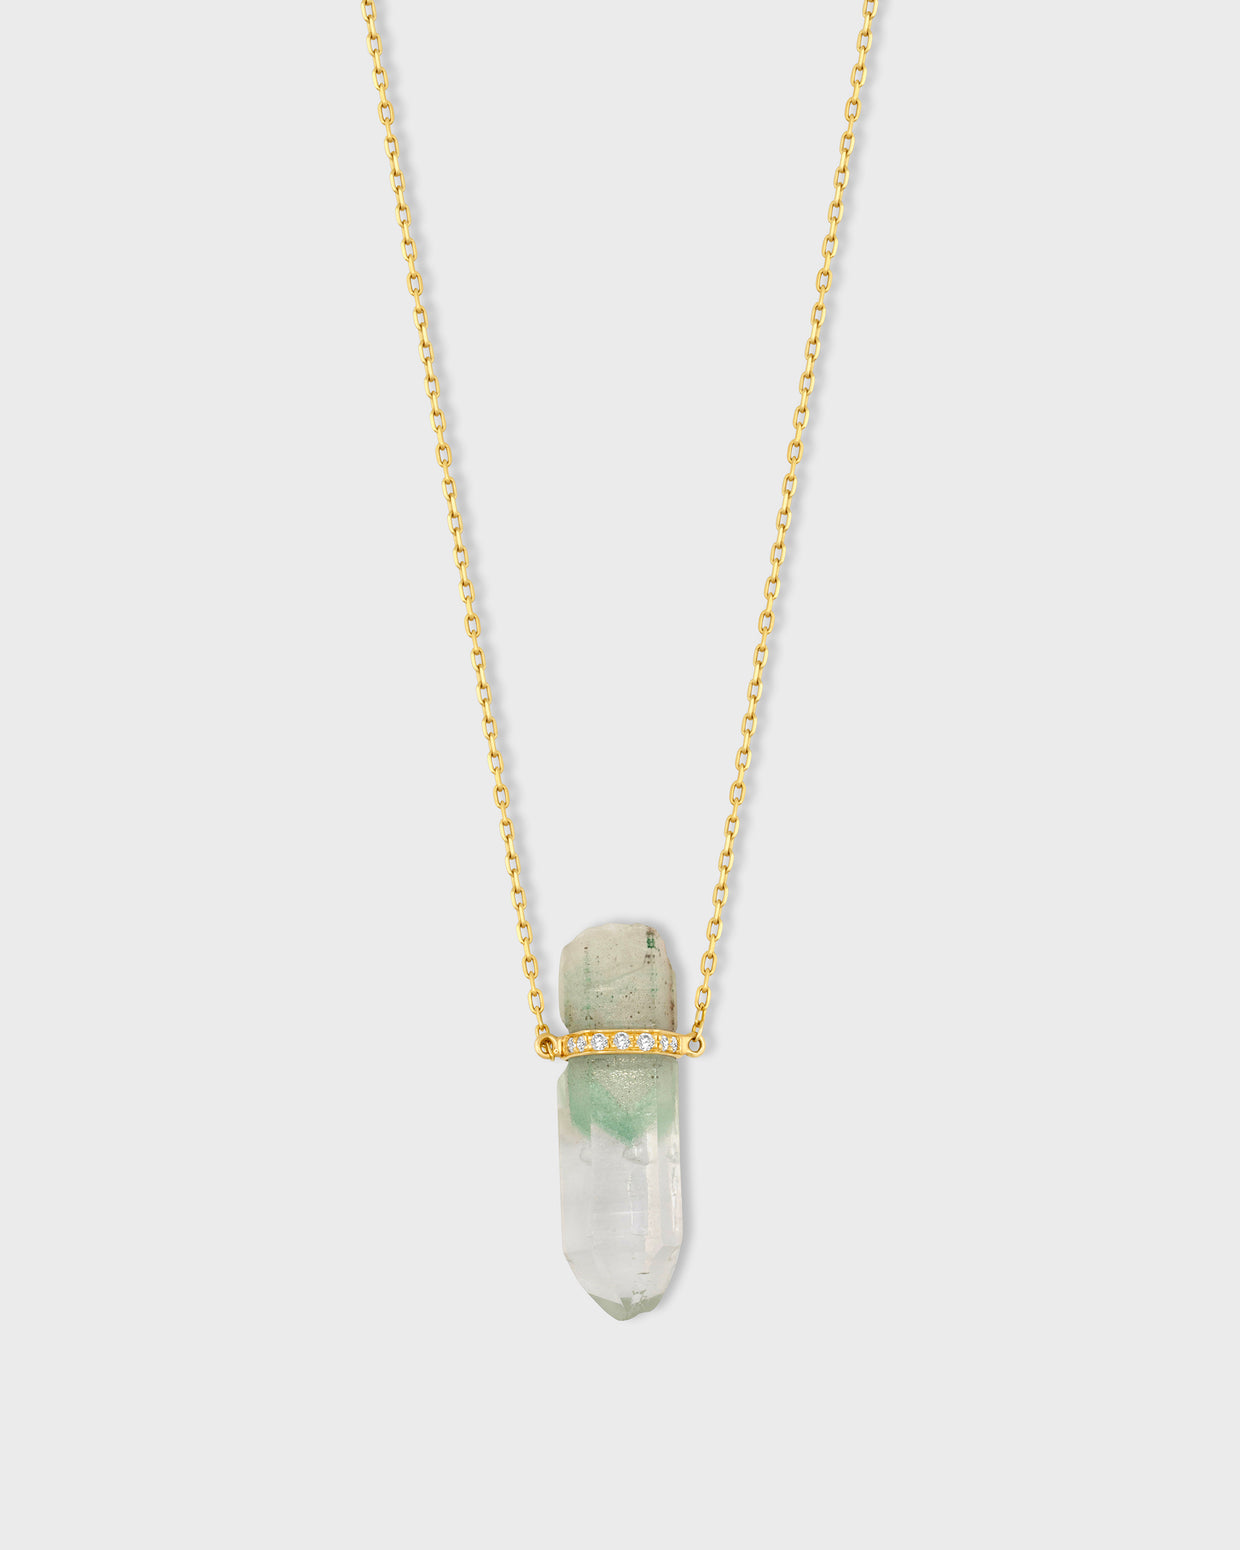 Crystalline Green Phantom Quartz Diamond Bar Necklace